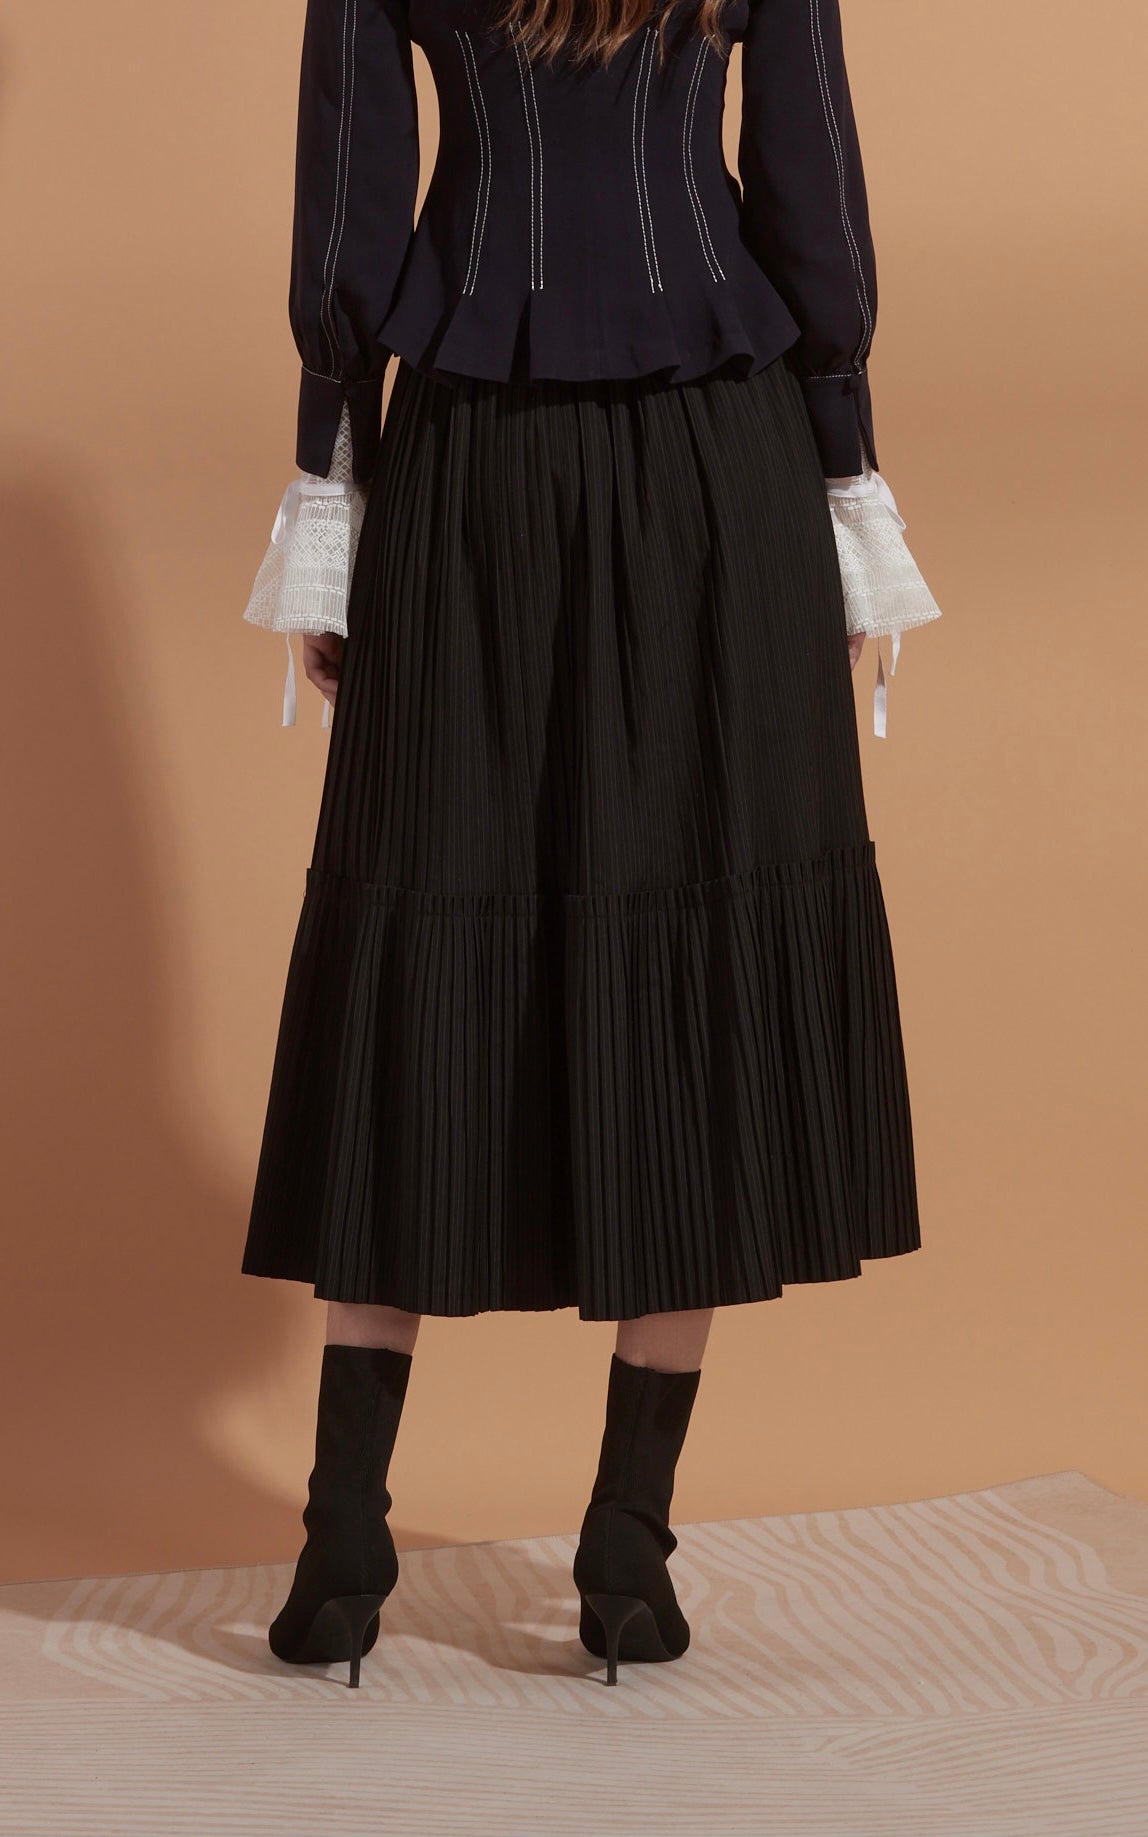 Striped pattern pleated skirt